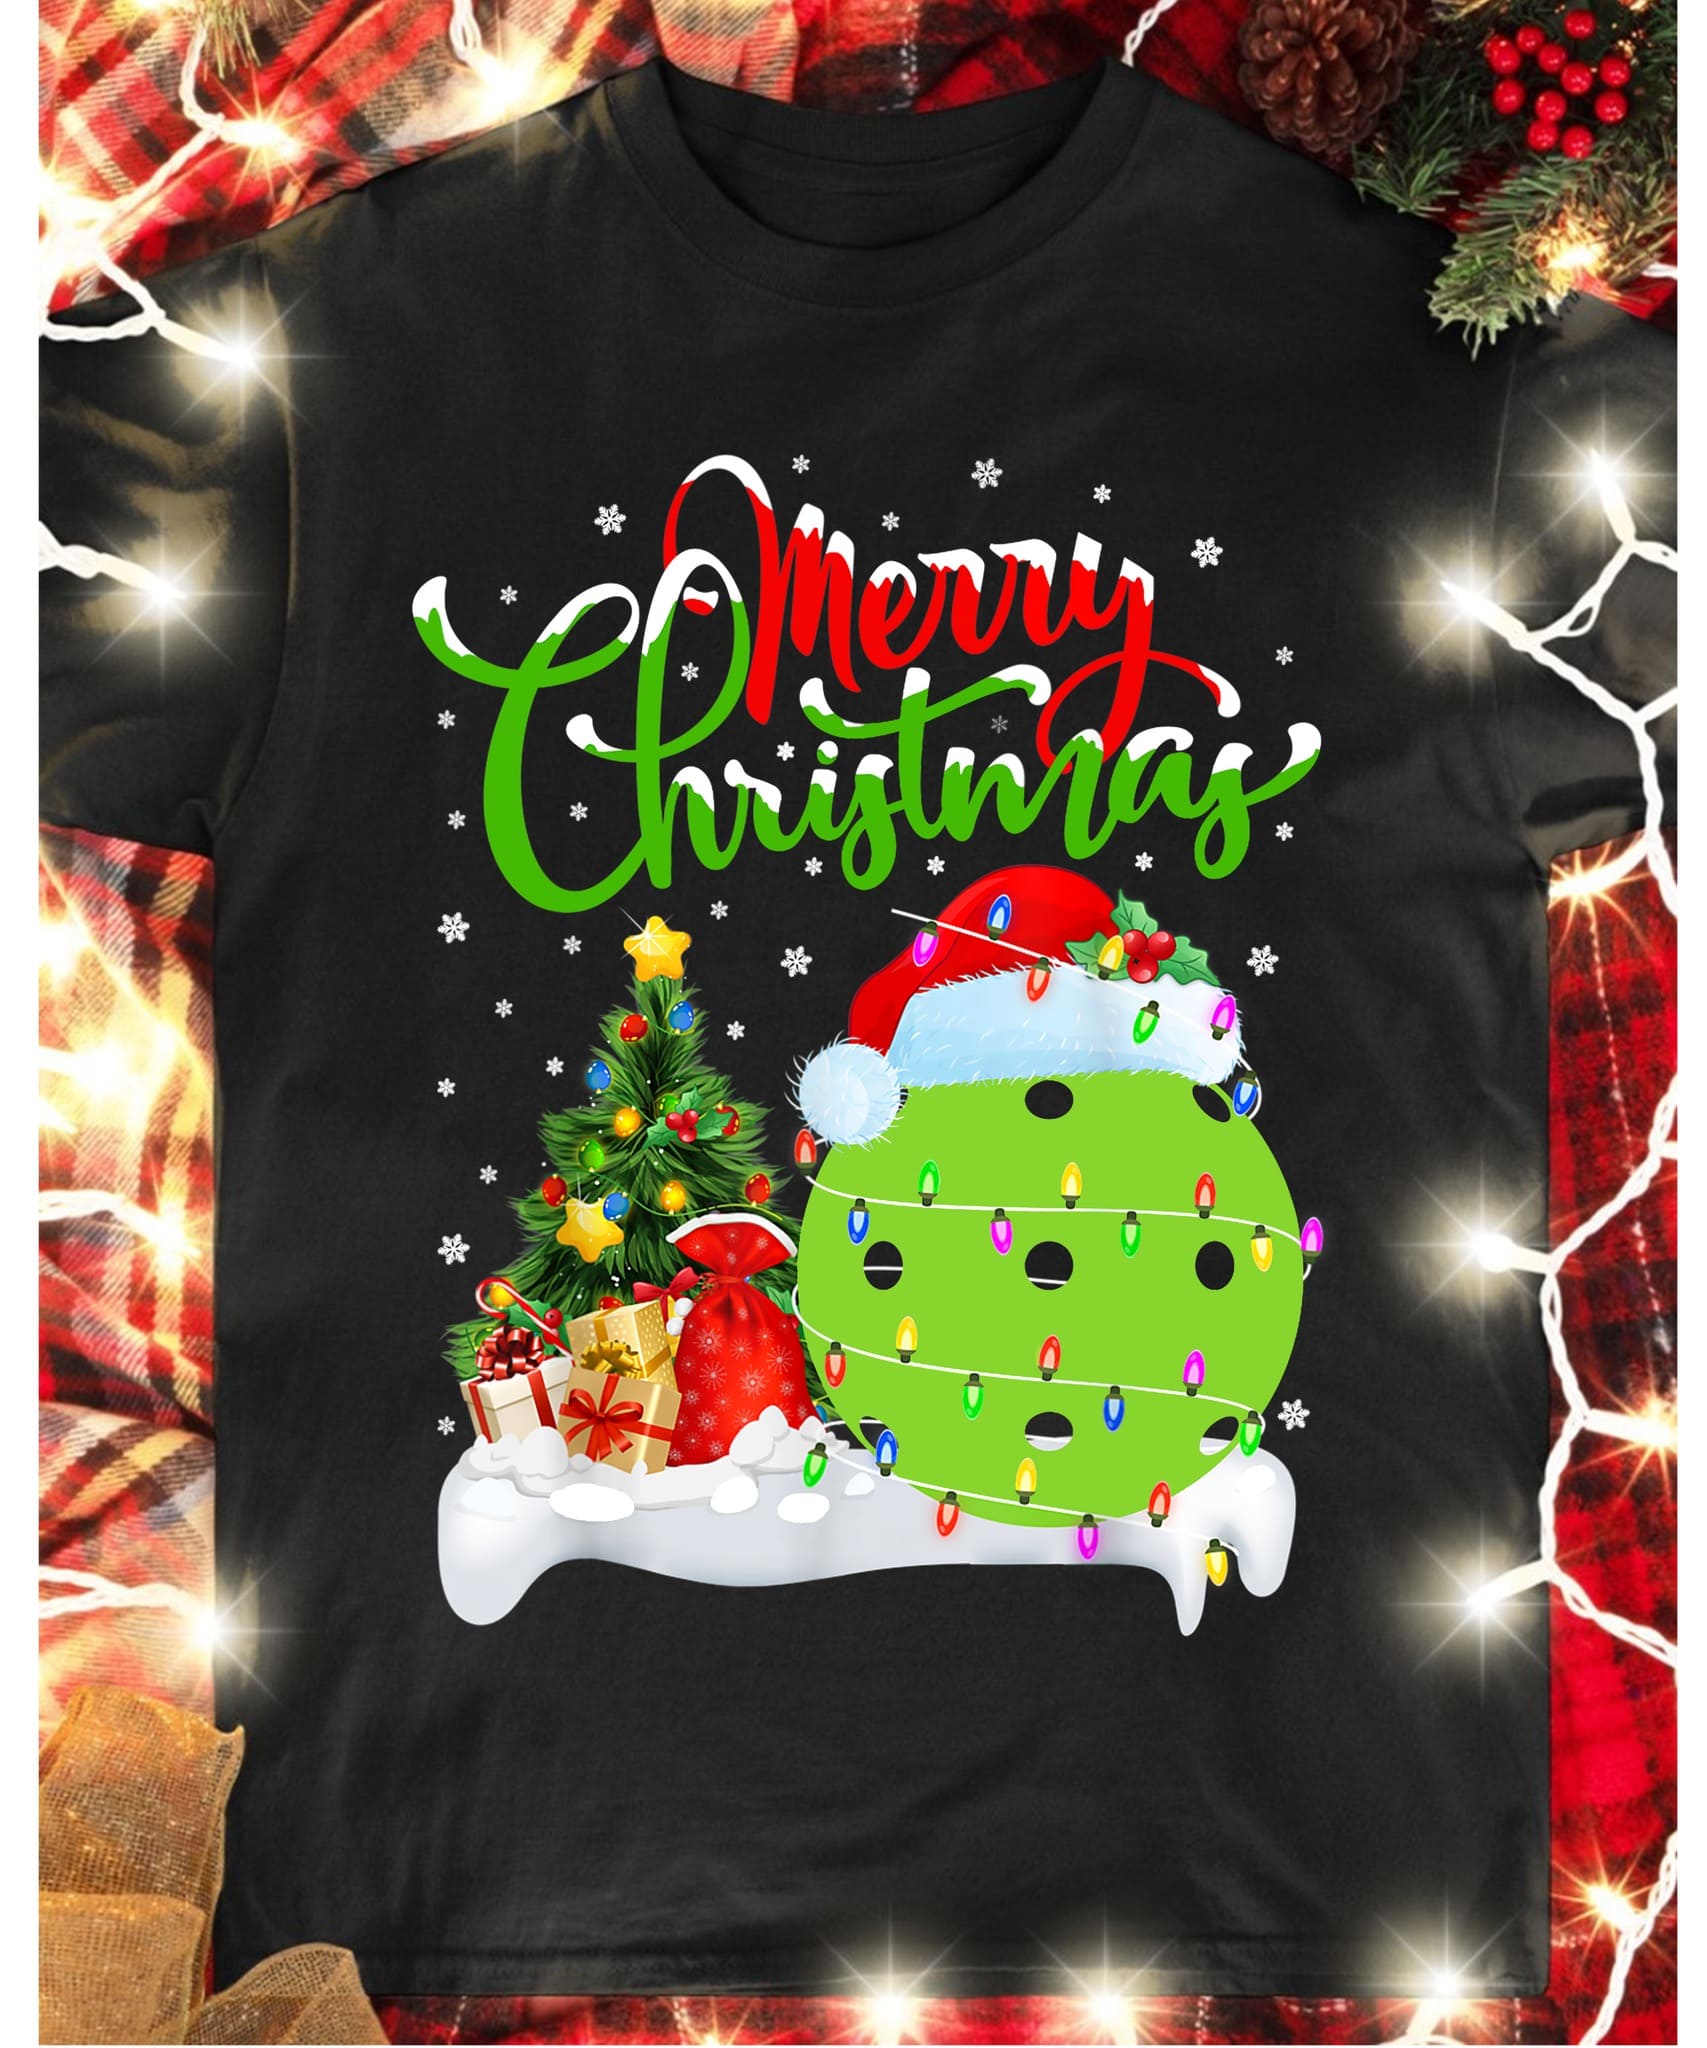 Merry Christmas T-shirt - Christmas tree and bowling, love playing bowling